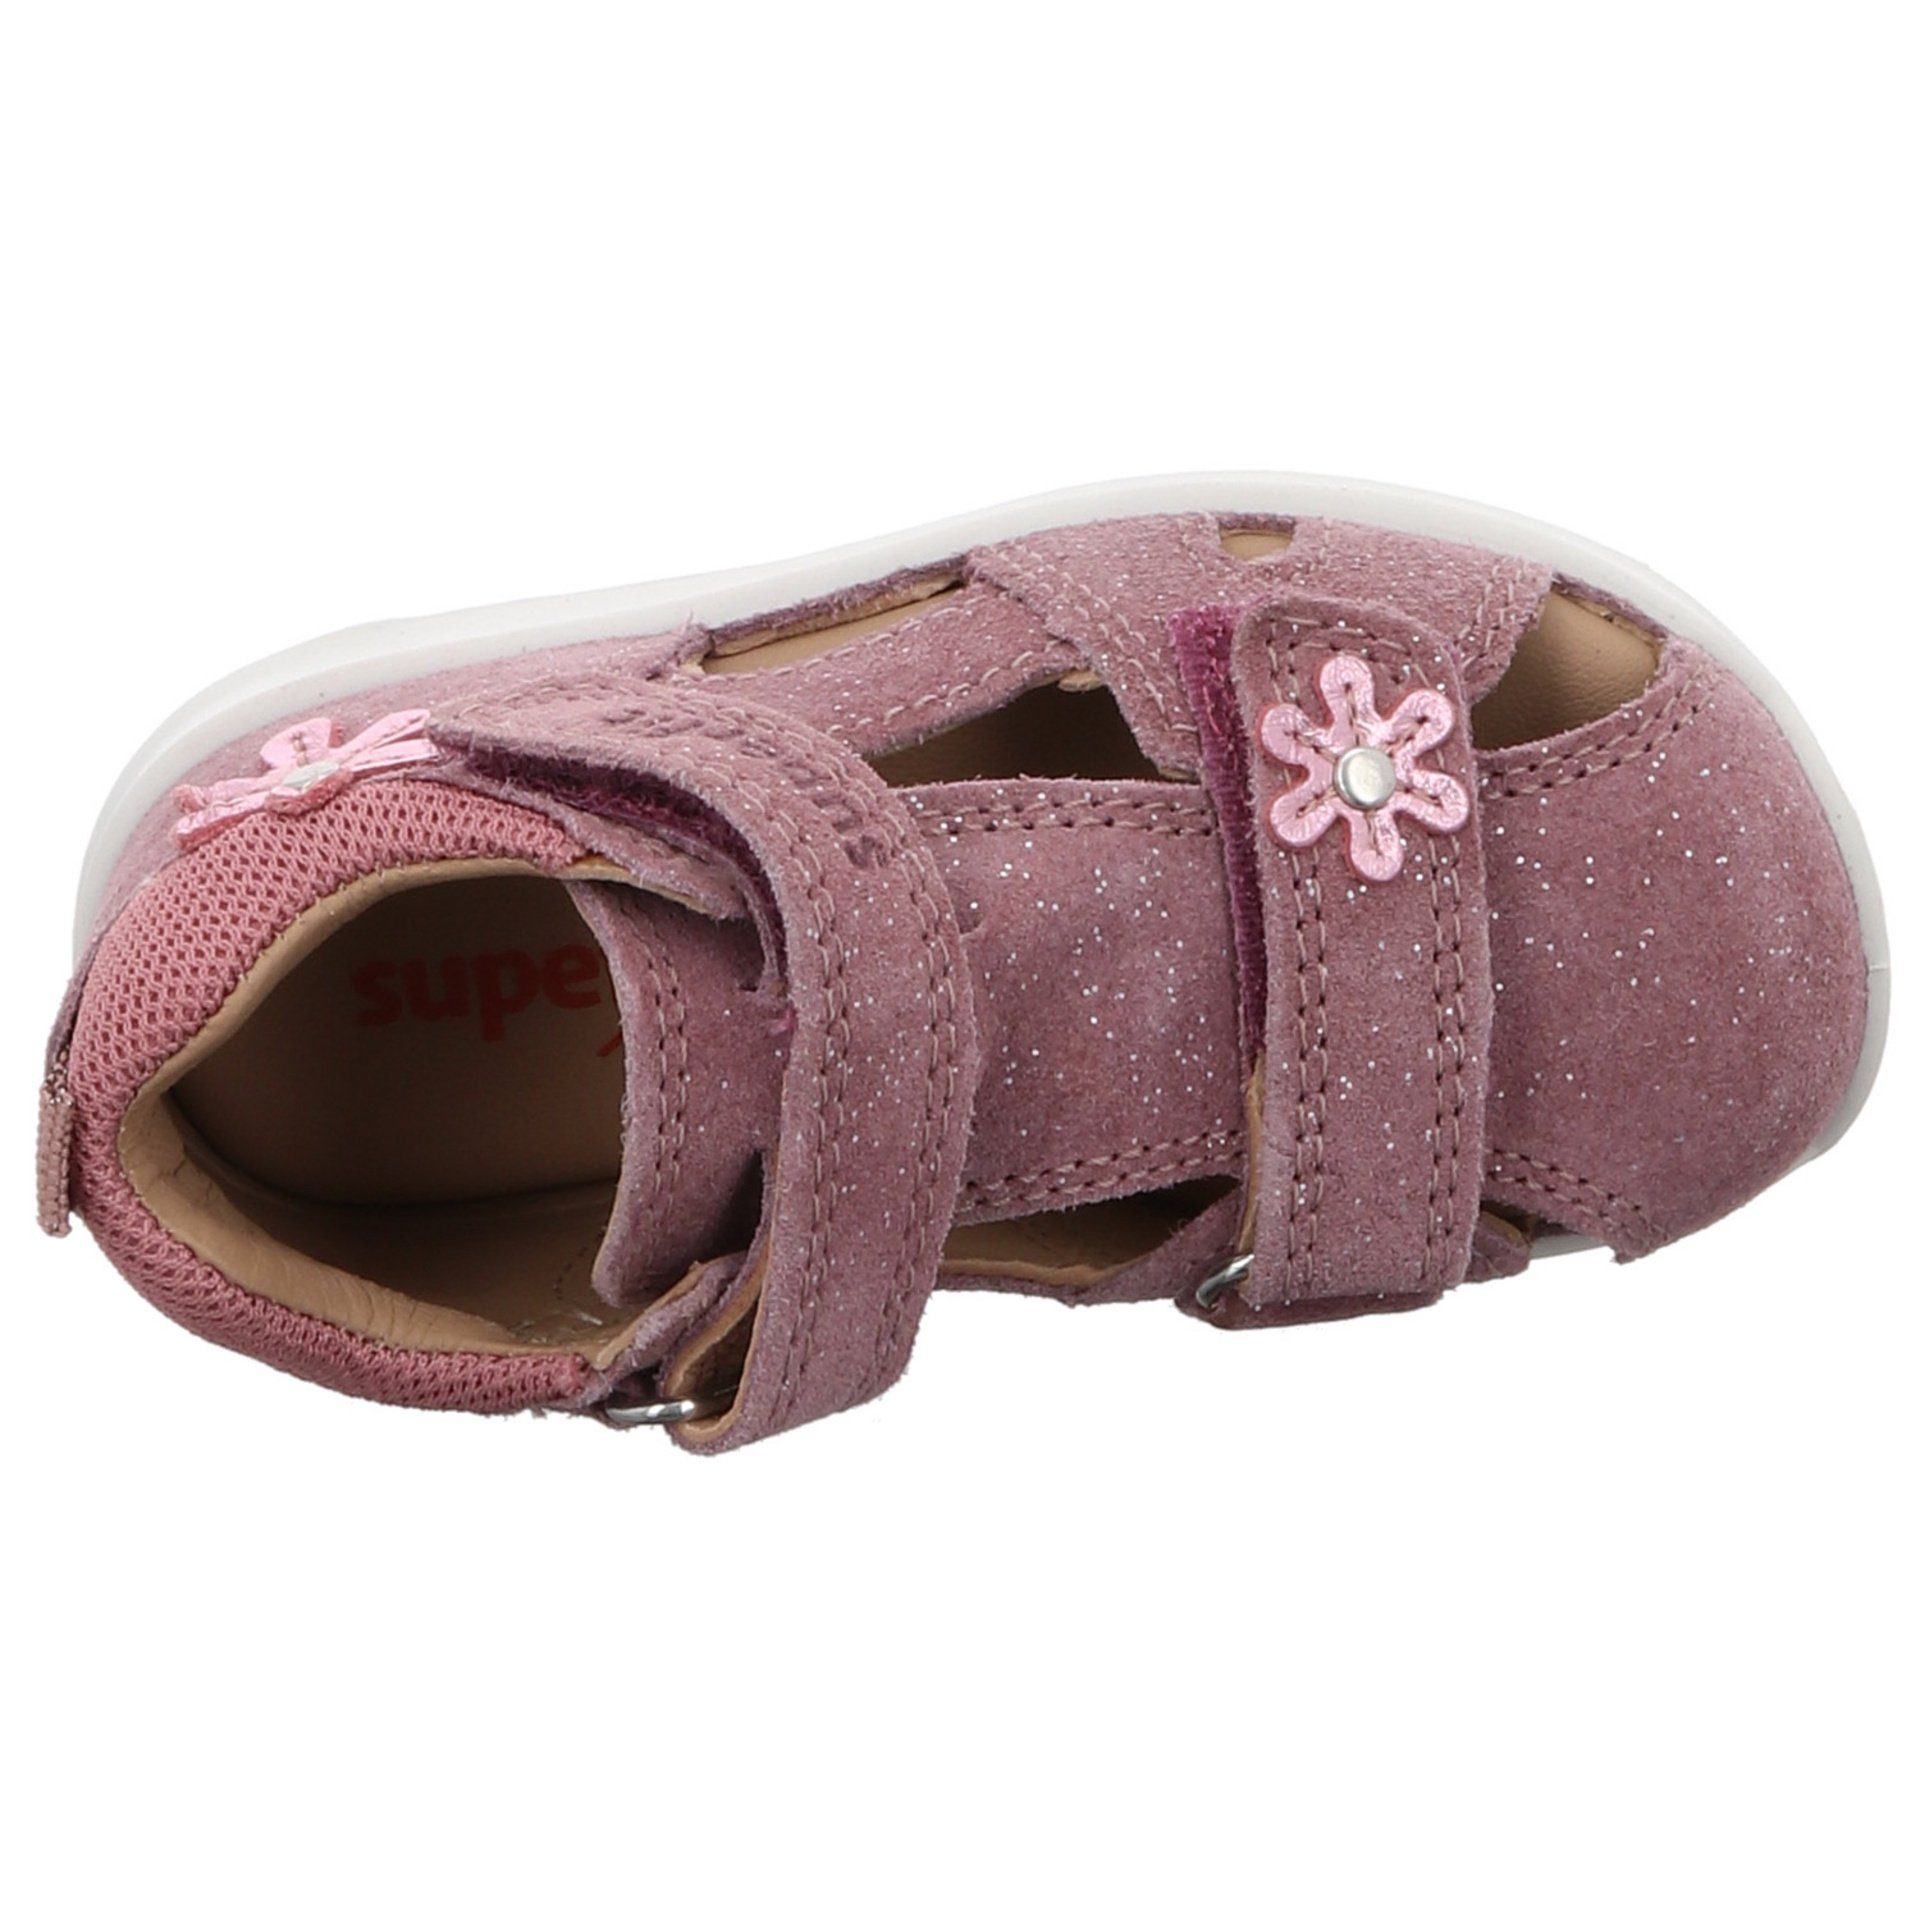 Superfit Mädchen Sandalen Schuhe Bumblebee Minilette Leder-/Textilkombination Sandale LILA/ROSA